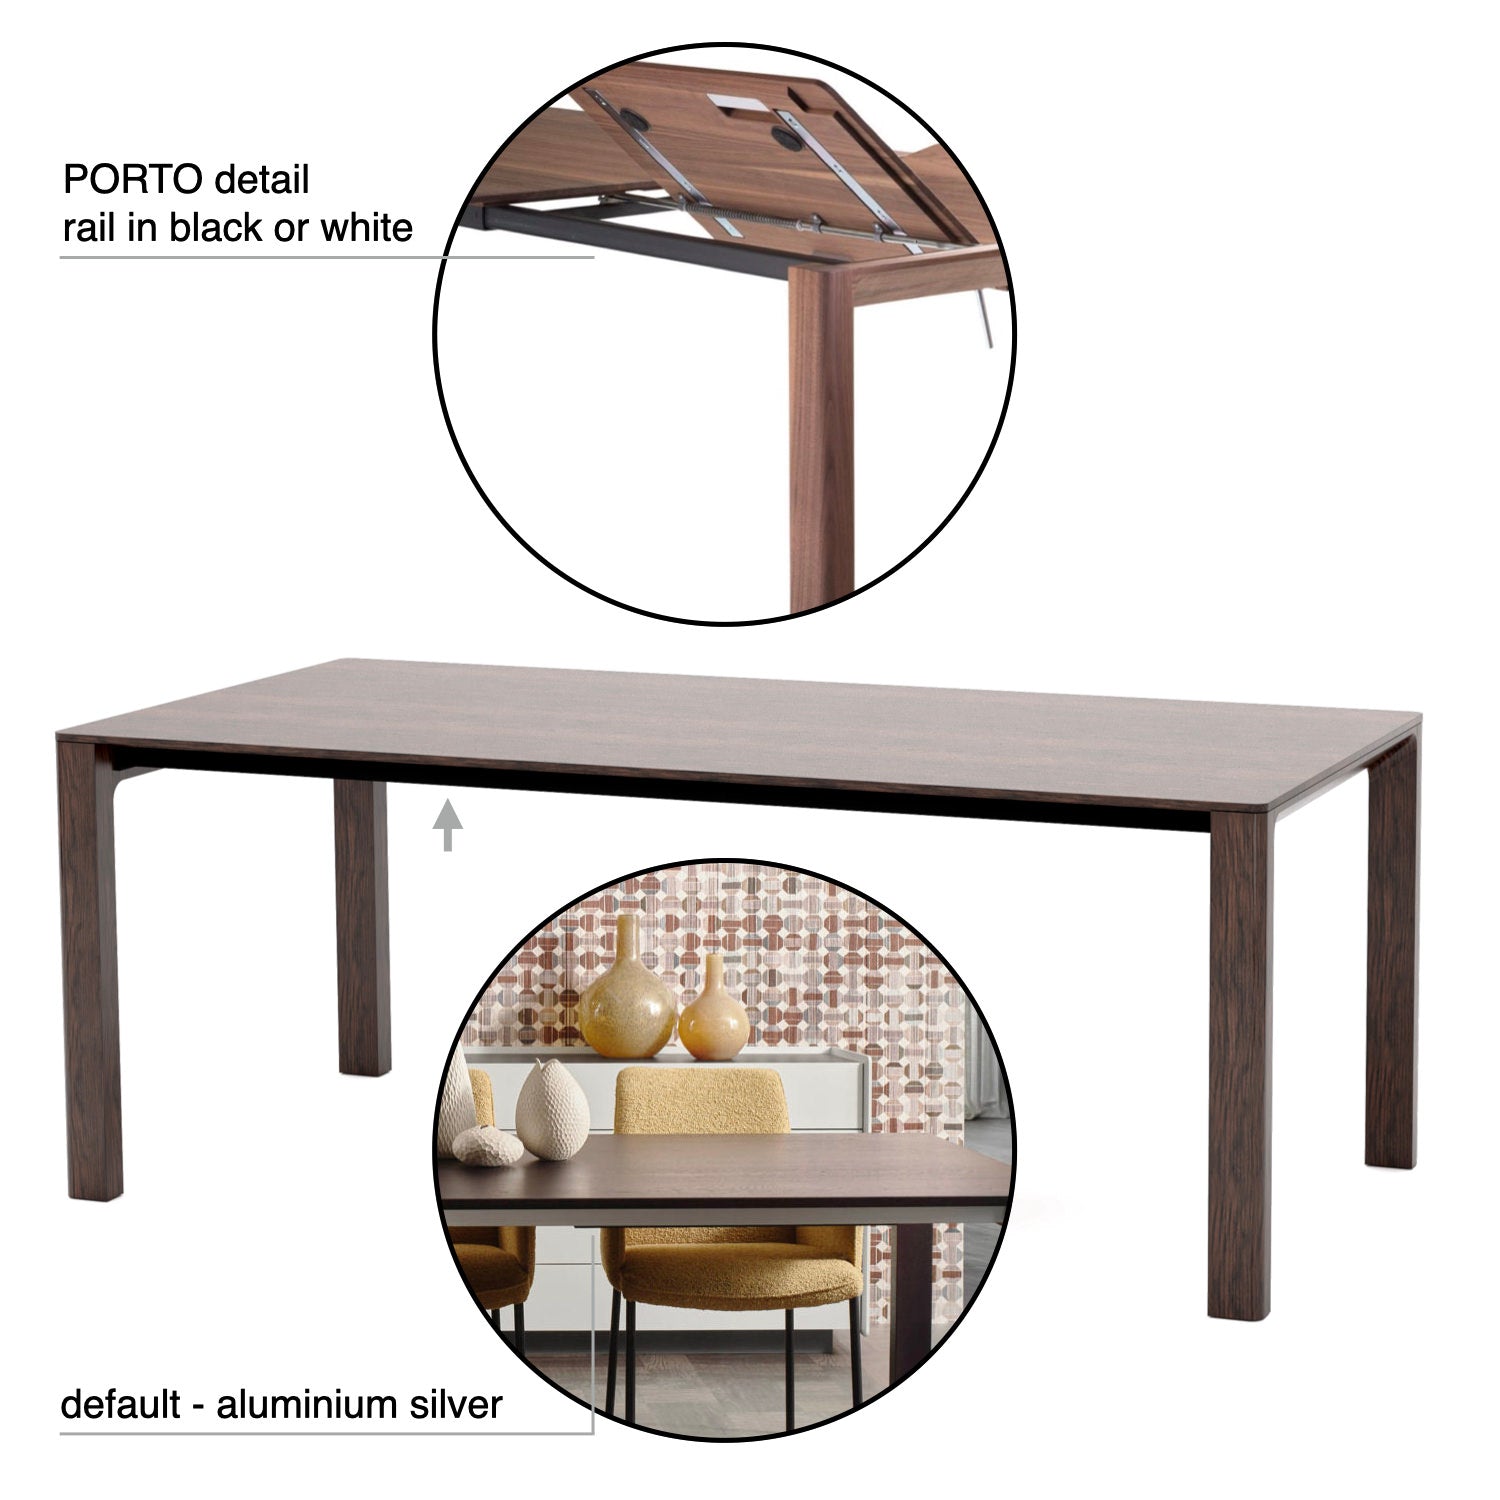 PORTO table detail - Christine Kröncke Interior Design